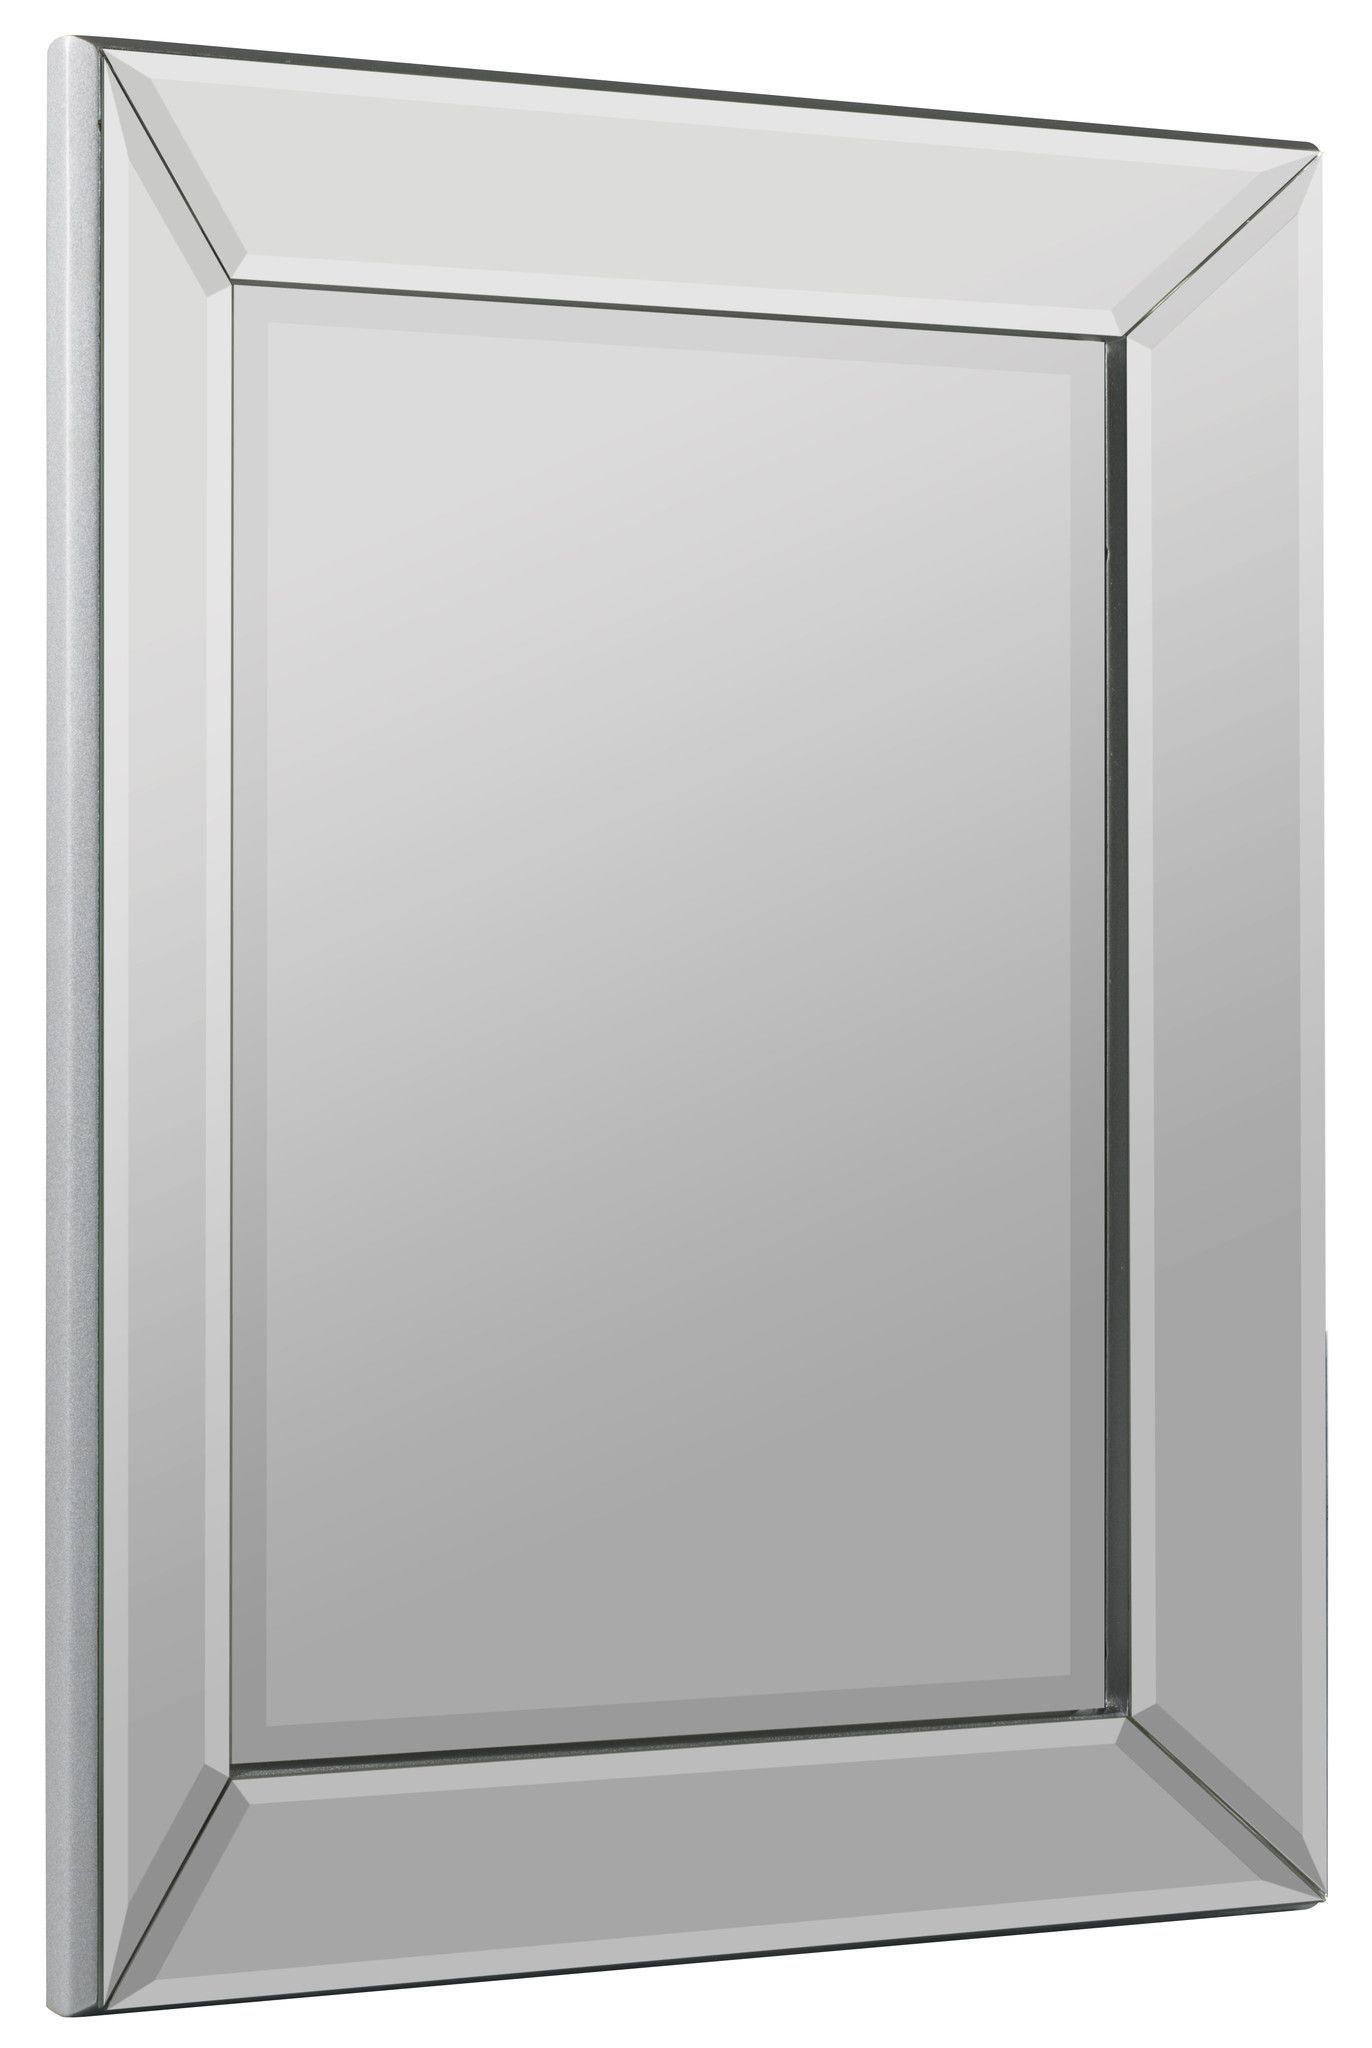 Porter Mirror Frameless Mirror; Beveled Mirror | Diy Bathroom Remodel Within Frameless Rectangular Beveled Wall Mirrors (View 2 of 15)